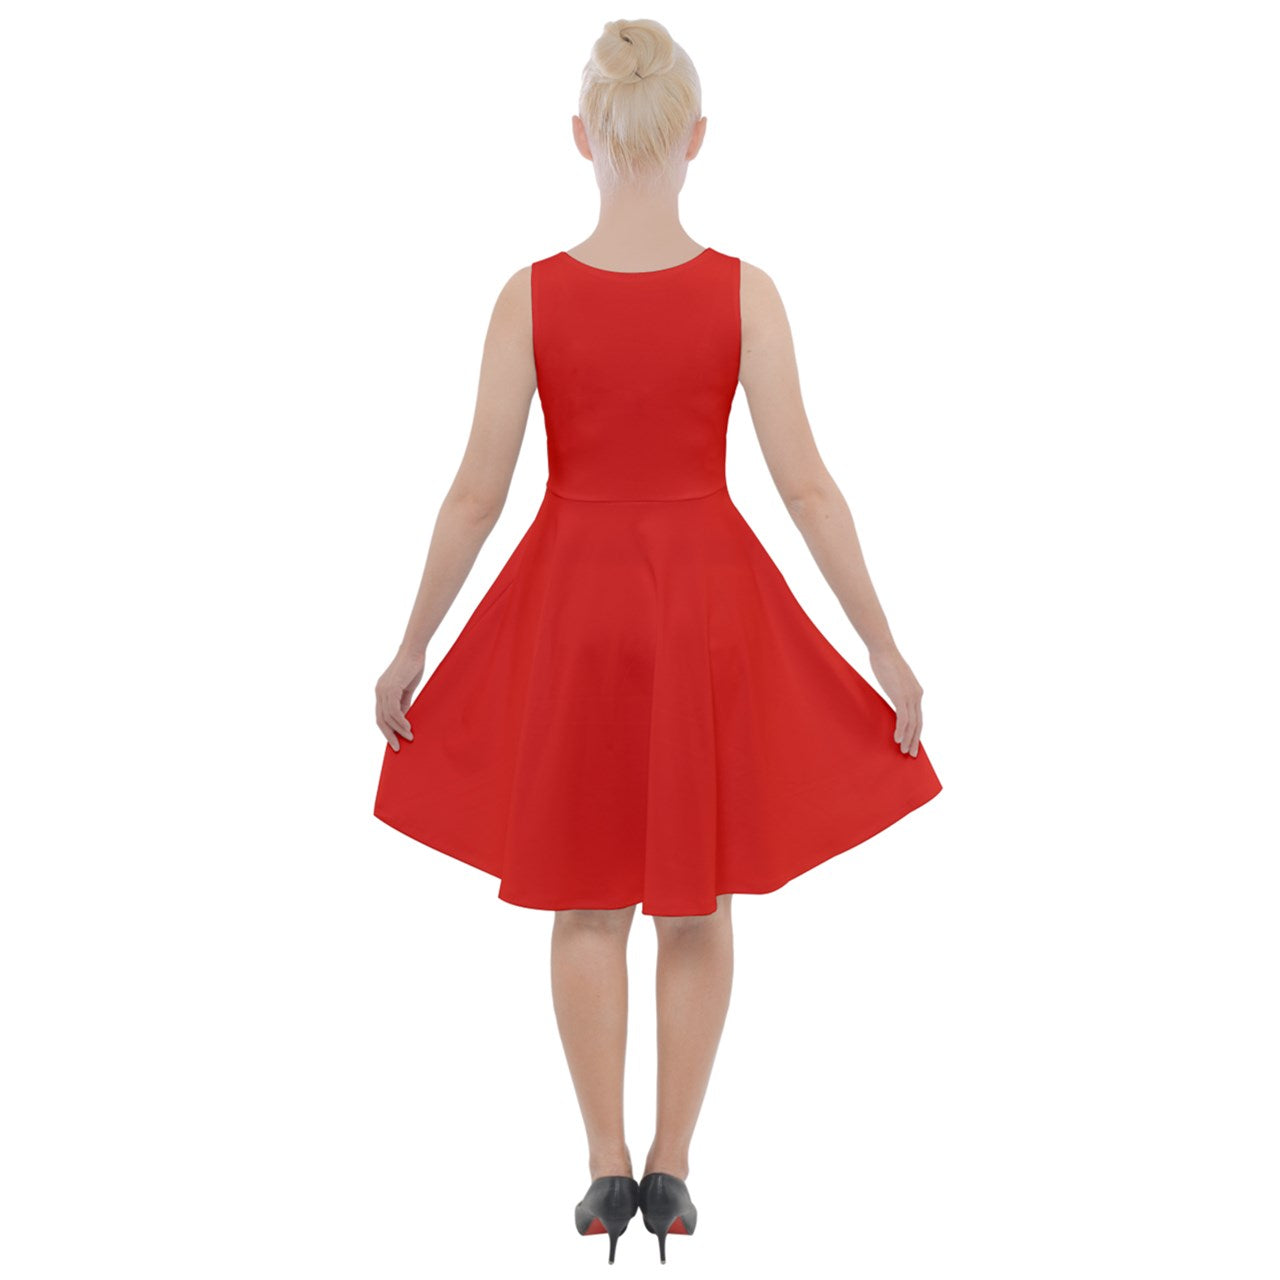 Pattern 229 Knee-Length Skater Dress with Pockets